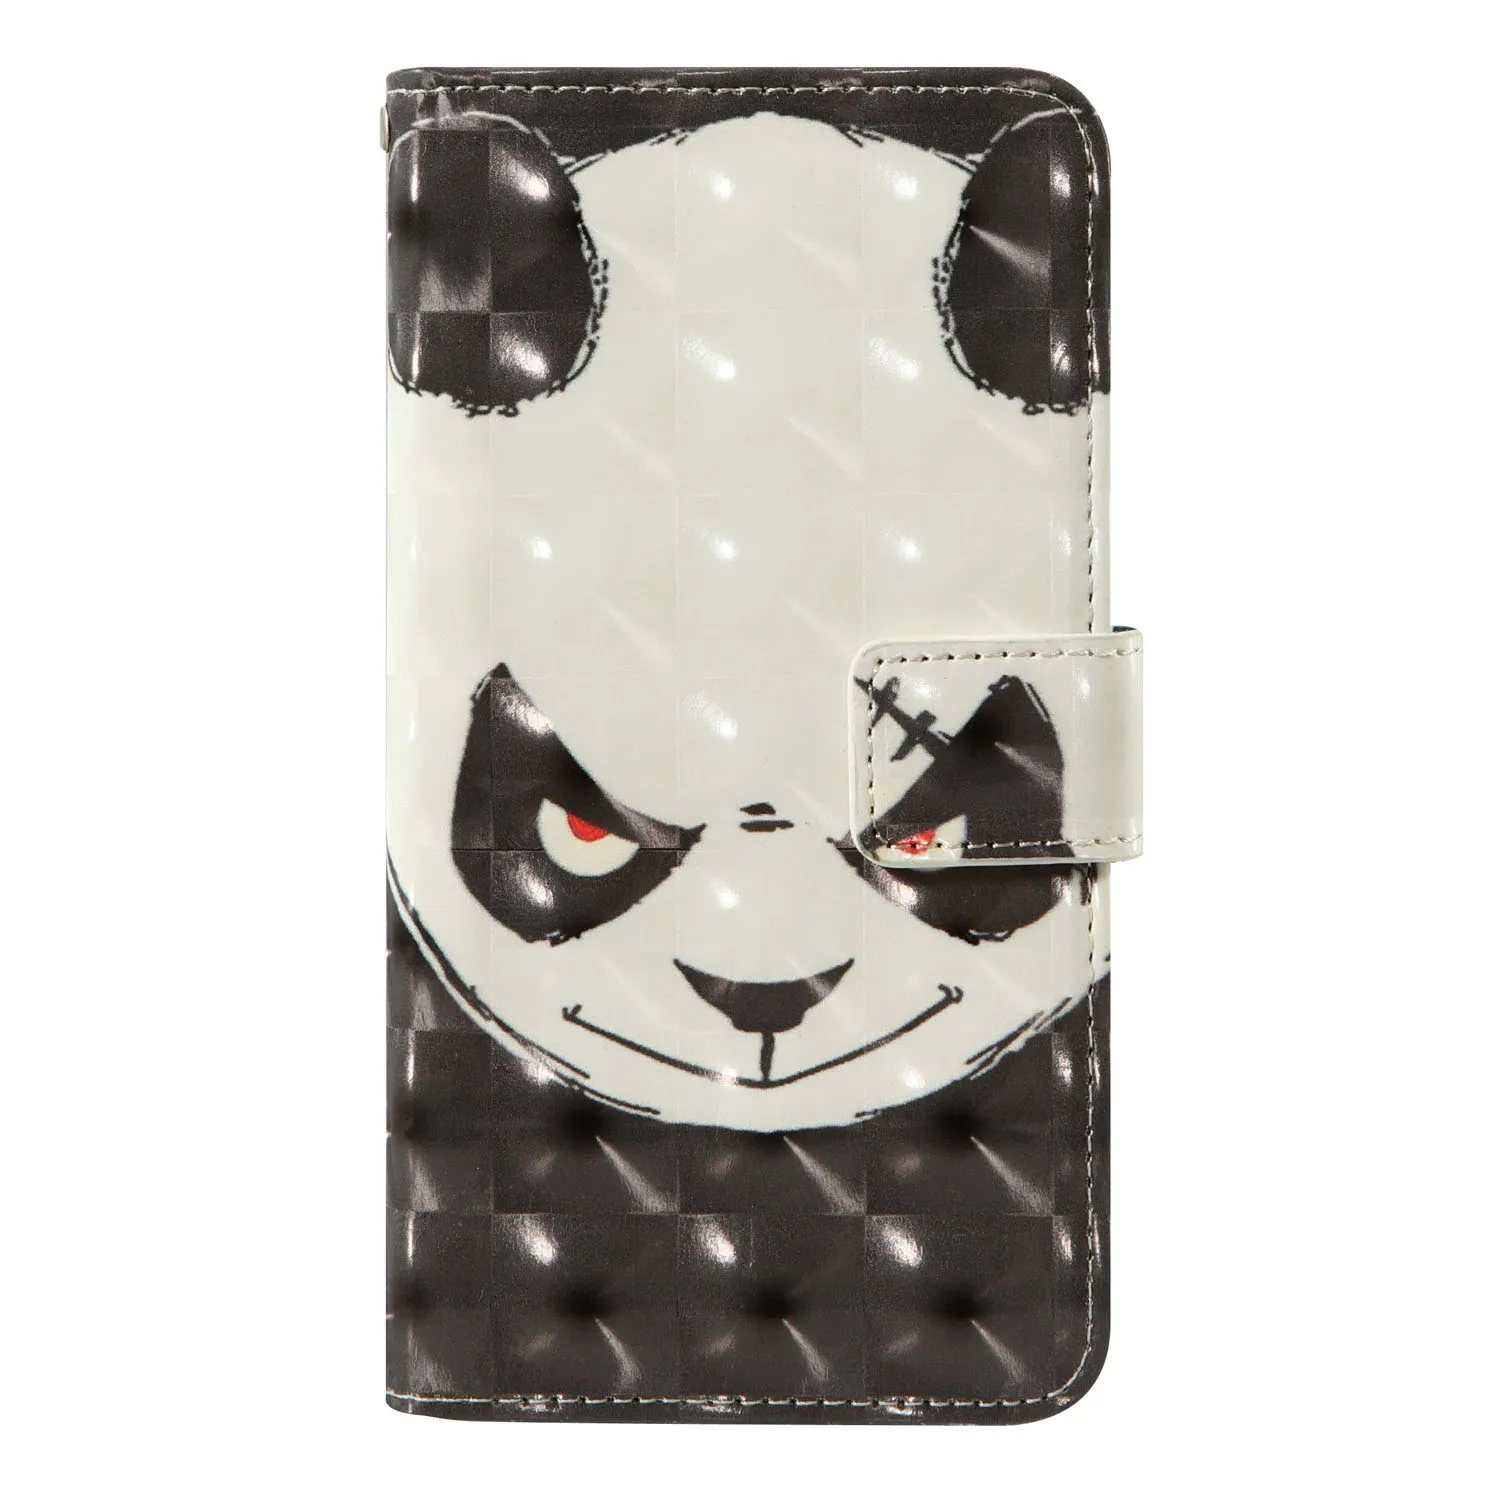 3D Чехол-портмоне из кожи с откидной Чехол для XGODY X27 с двумя sim-картами XR Y27 P30 S9 Y28 D28 S10 Коврики RS D27 D26 P20 Pro Y14 телефон чехол s - Цвет: Fierce panda